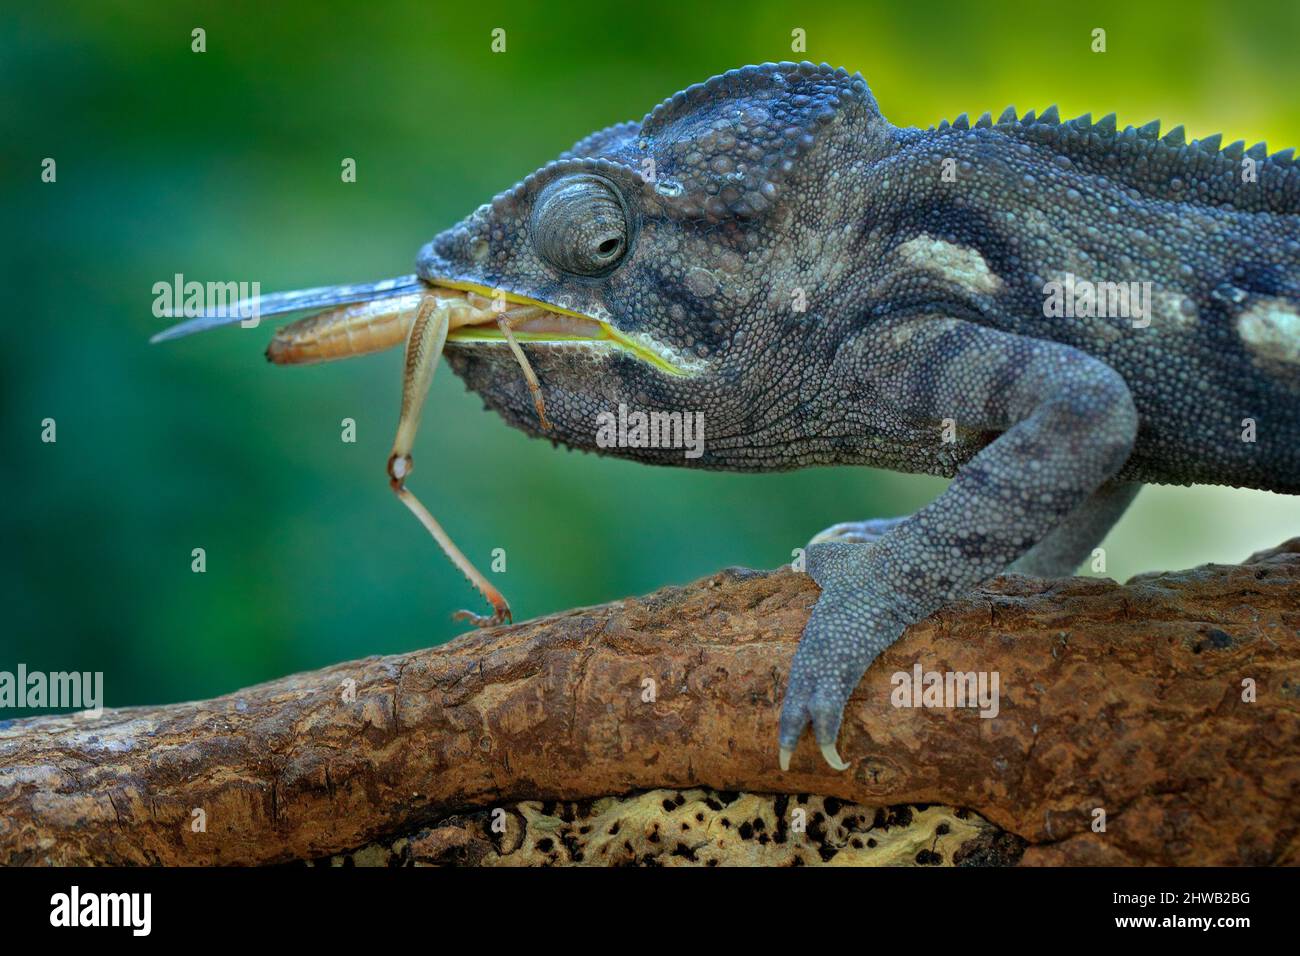 Insecto de caza Chameleon con lengua larga. Exótico hermoso reptil verde endémico con cola larga de Madagascar. La escena de la vida silvestre de la naturaleza. Furcifer Foto de stock